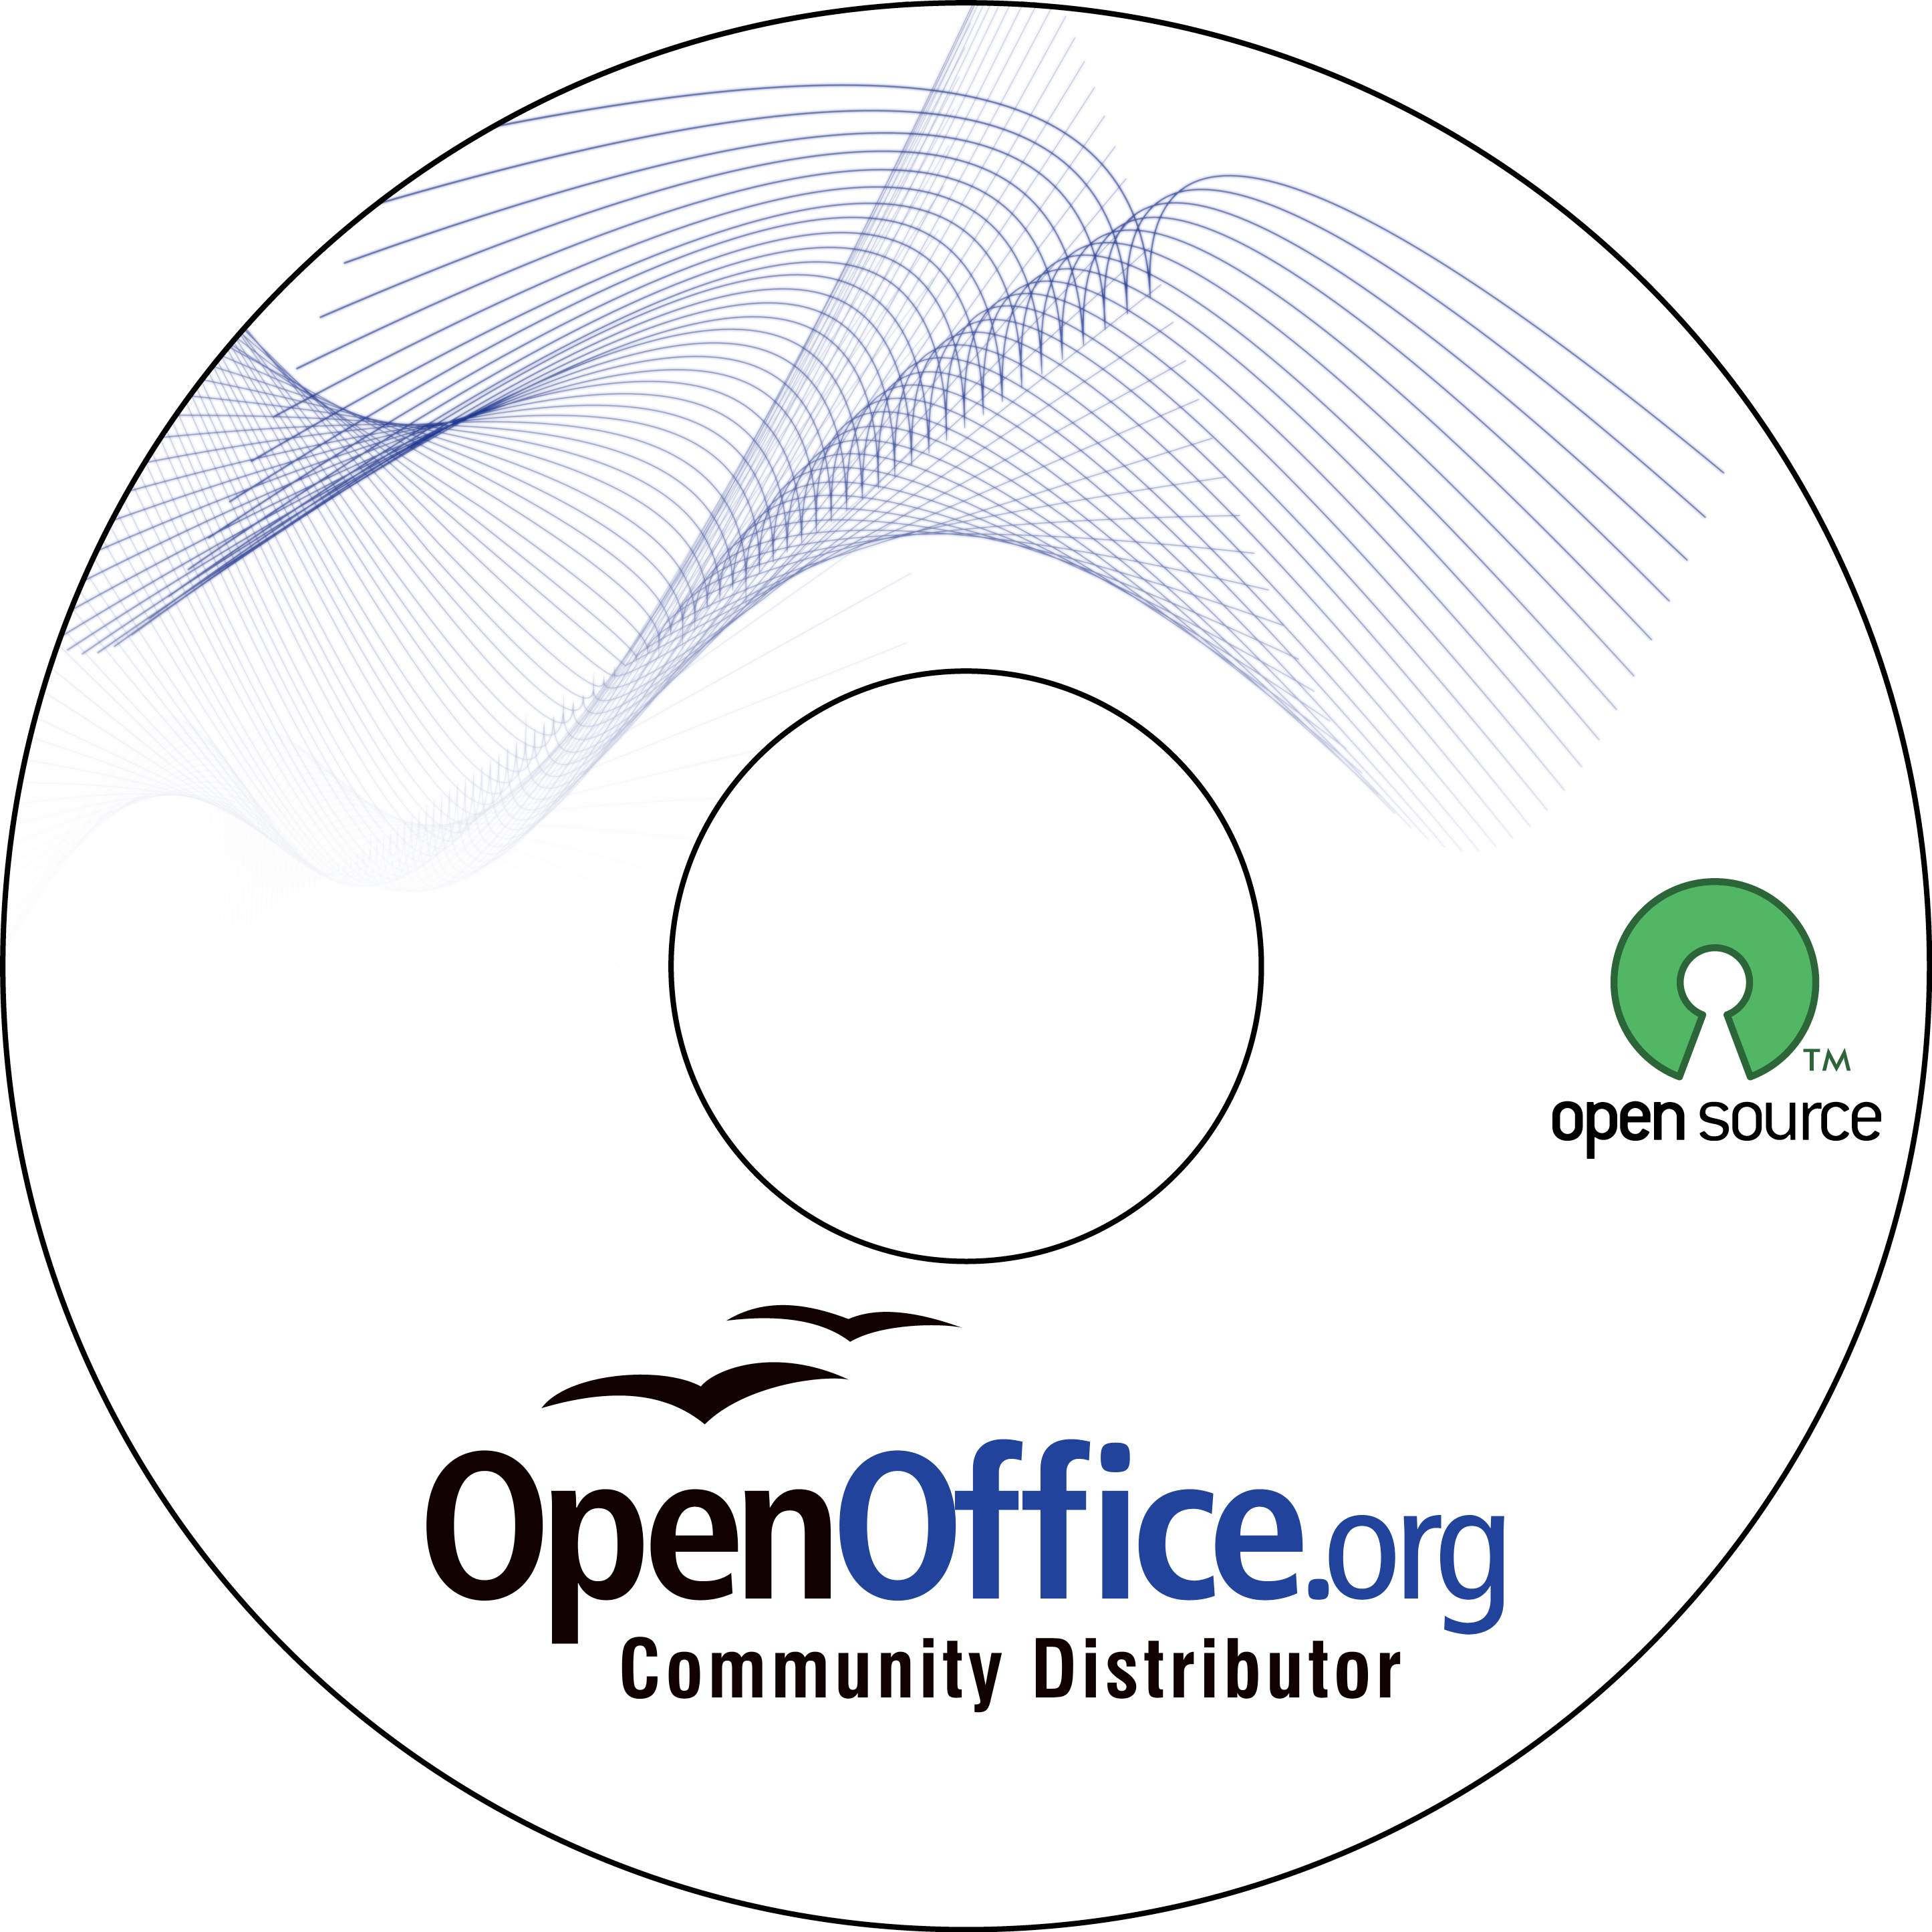 OpenOffice Logo - OpenOffice.org CD Art - previous versions